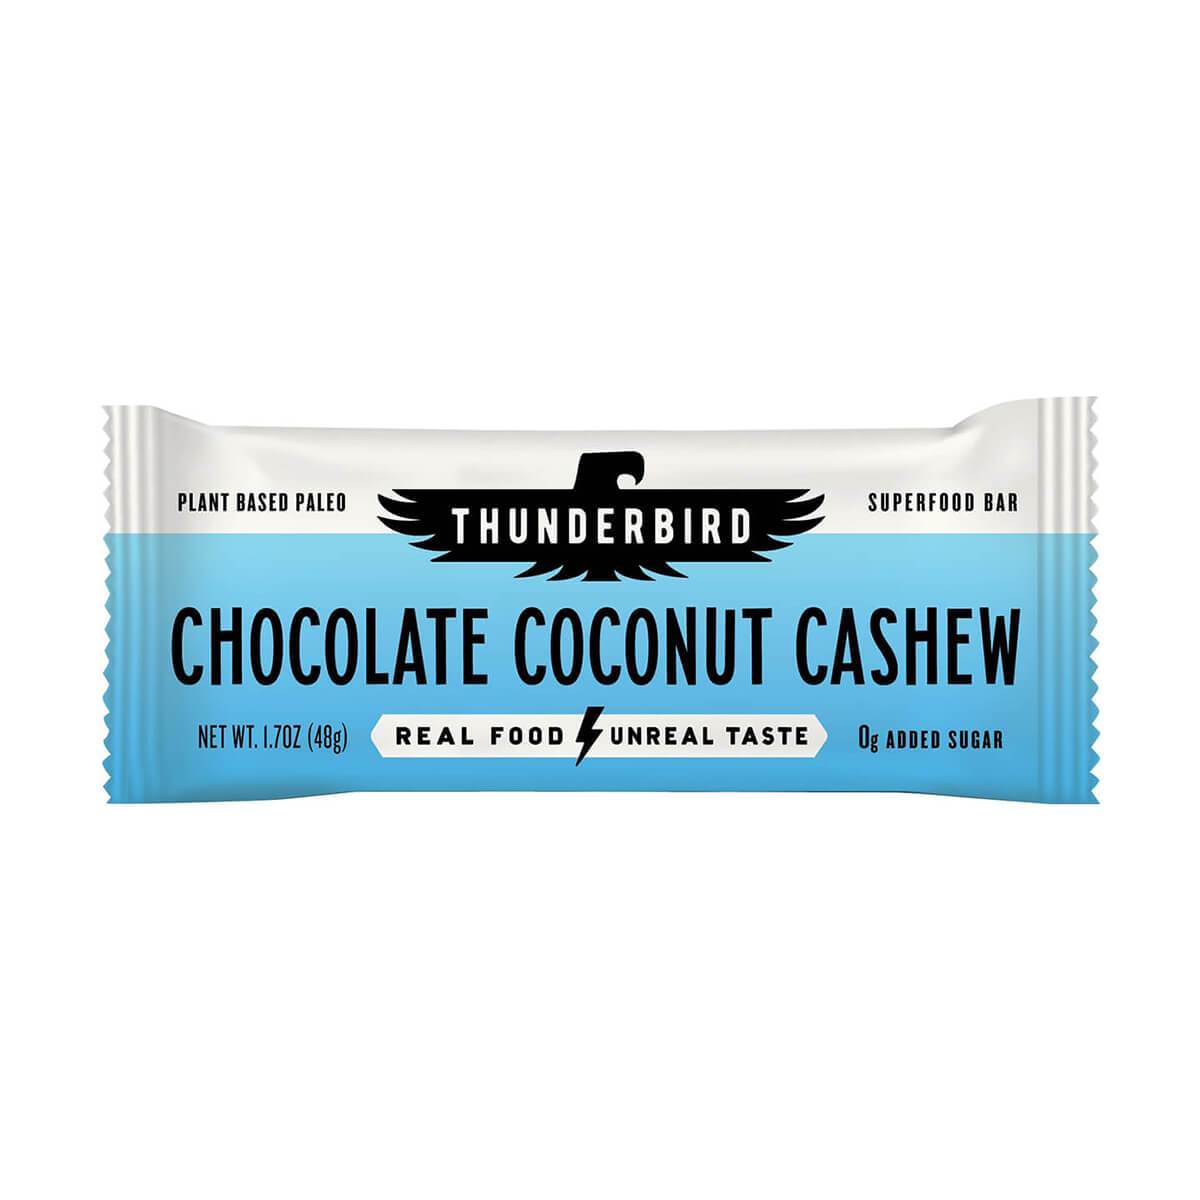 Chocolate Coconut Cashew - Box of 12 Bars